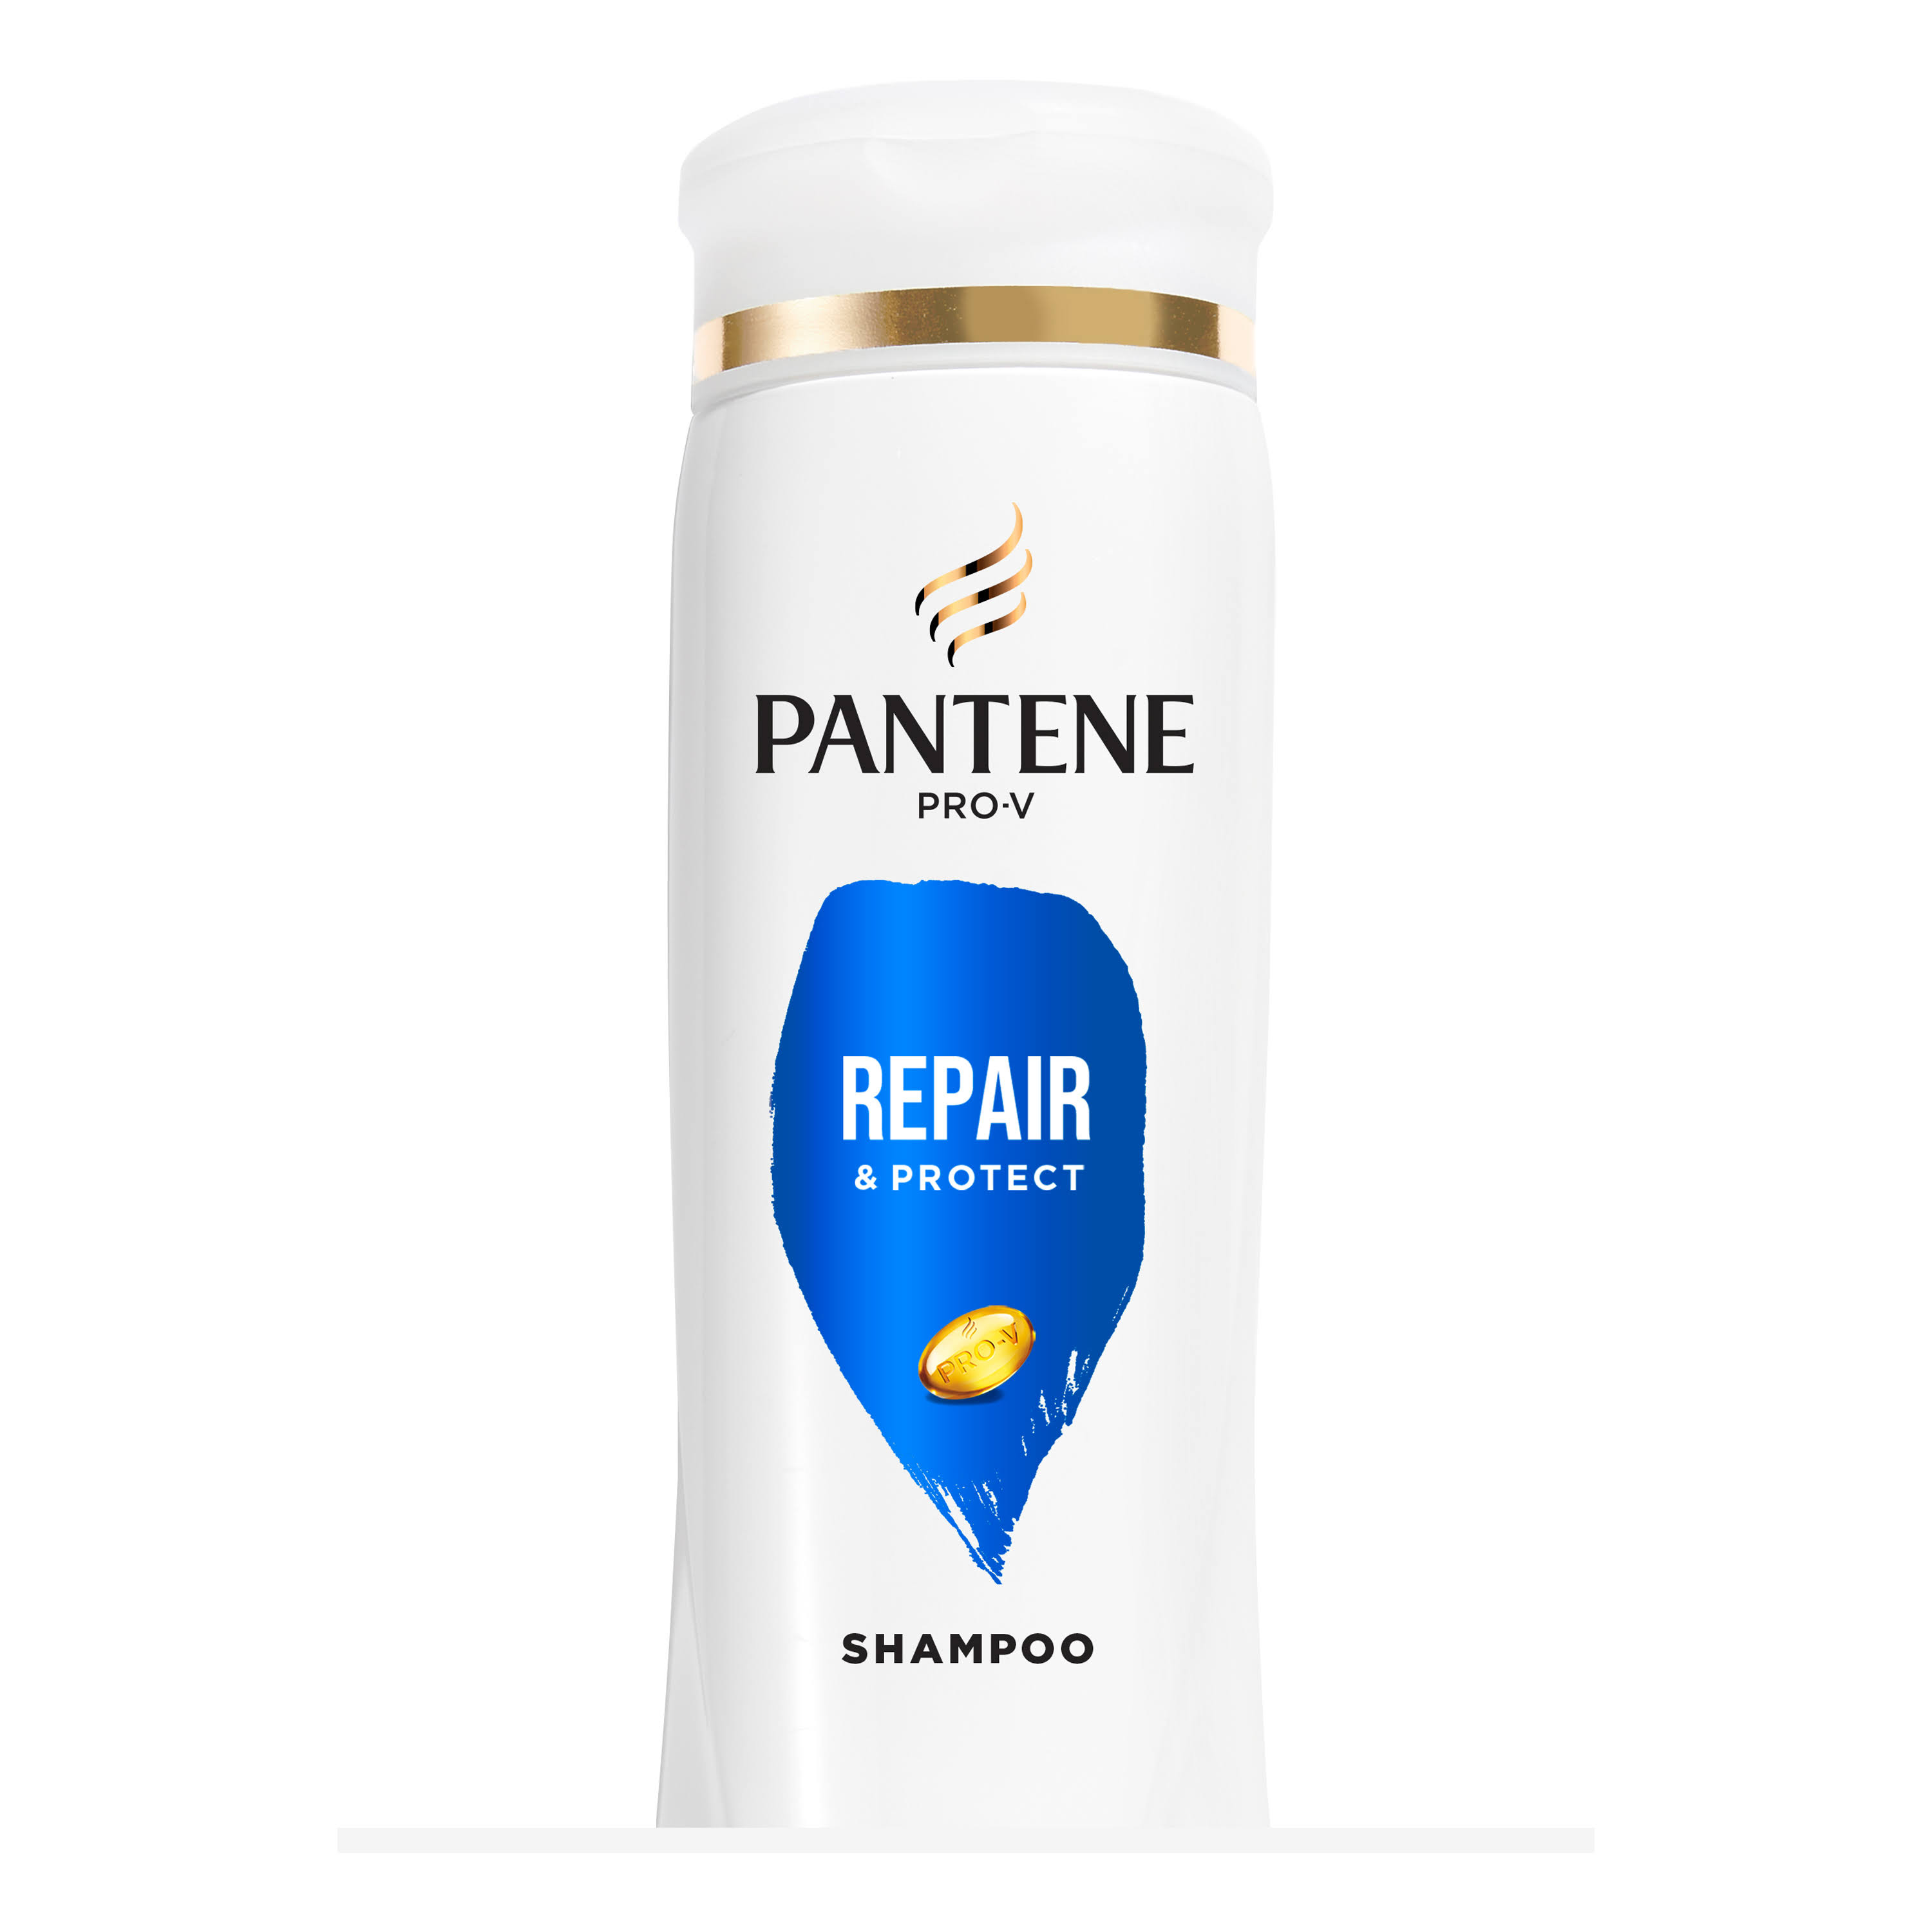 Pantene Pro-v Repair & Protect Shampoo, 12 Oz